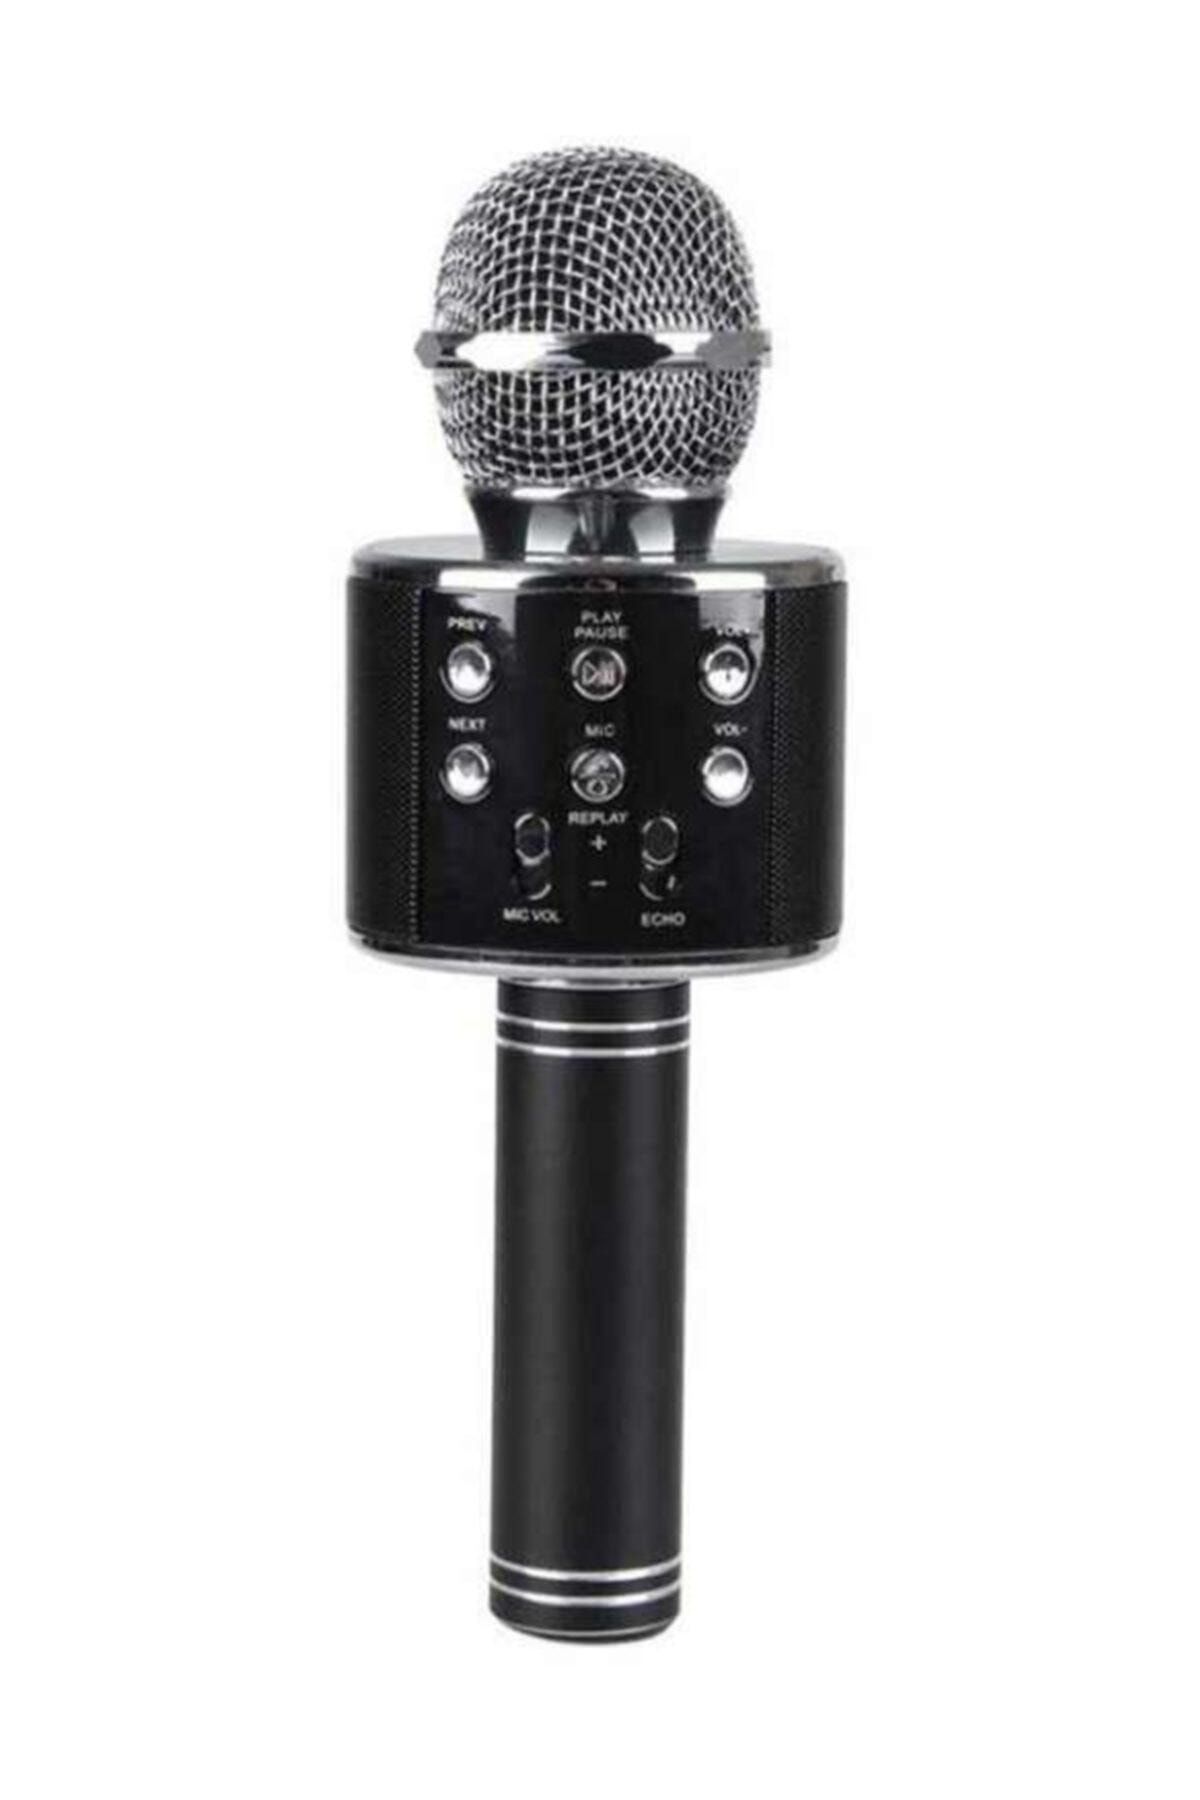 Piranha Siyah Karaoke Mikrofon 7817